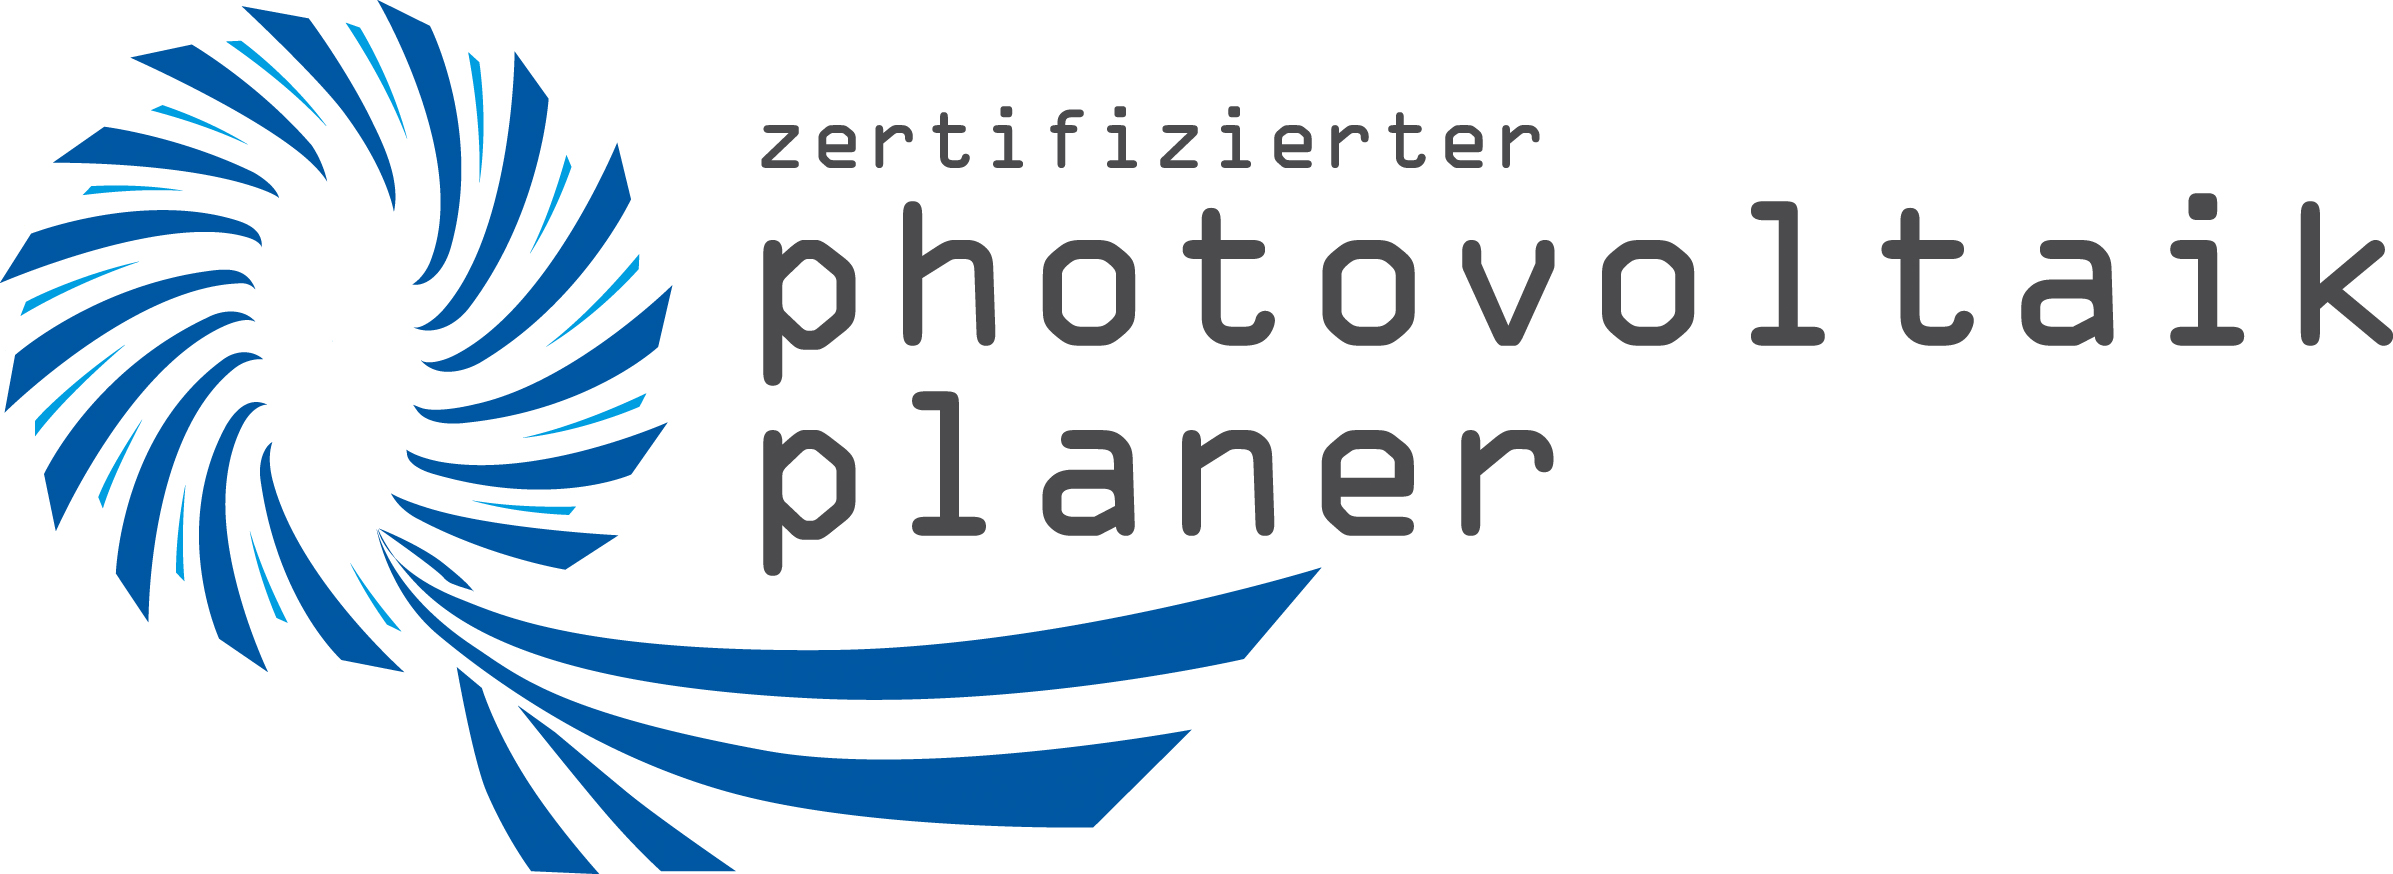 Zertifizierter Photovoltaikplaner